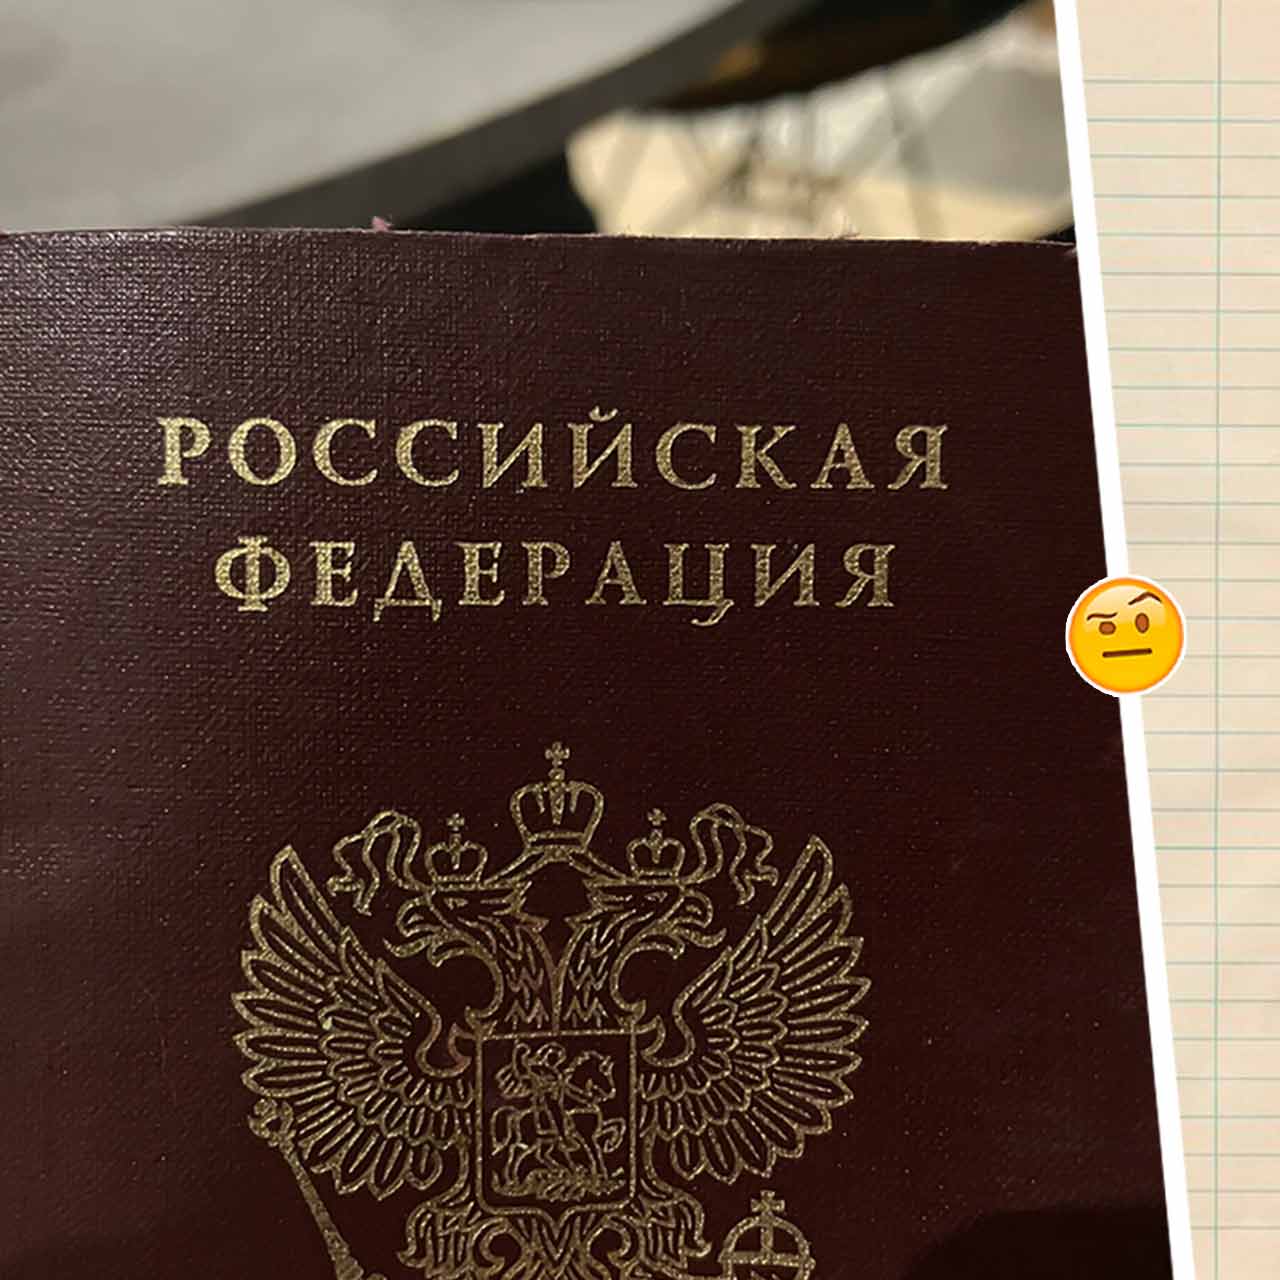 Обложка на паспорт своими руками в технике скрапбукинг